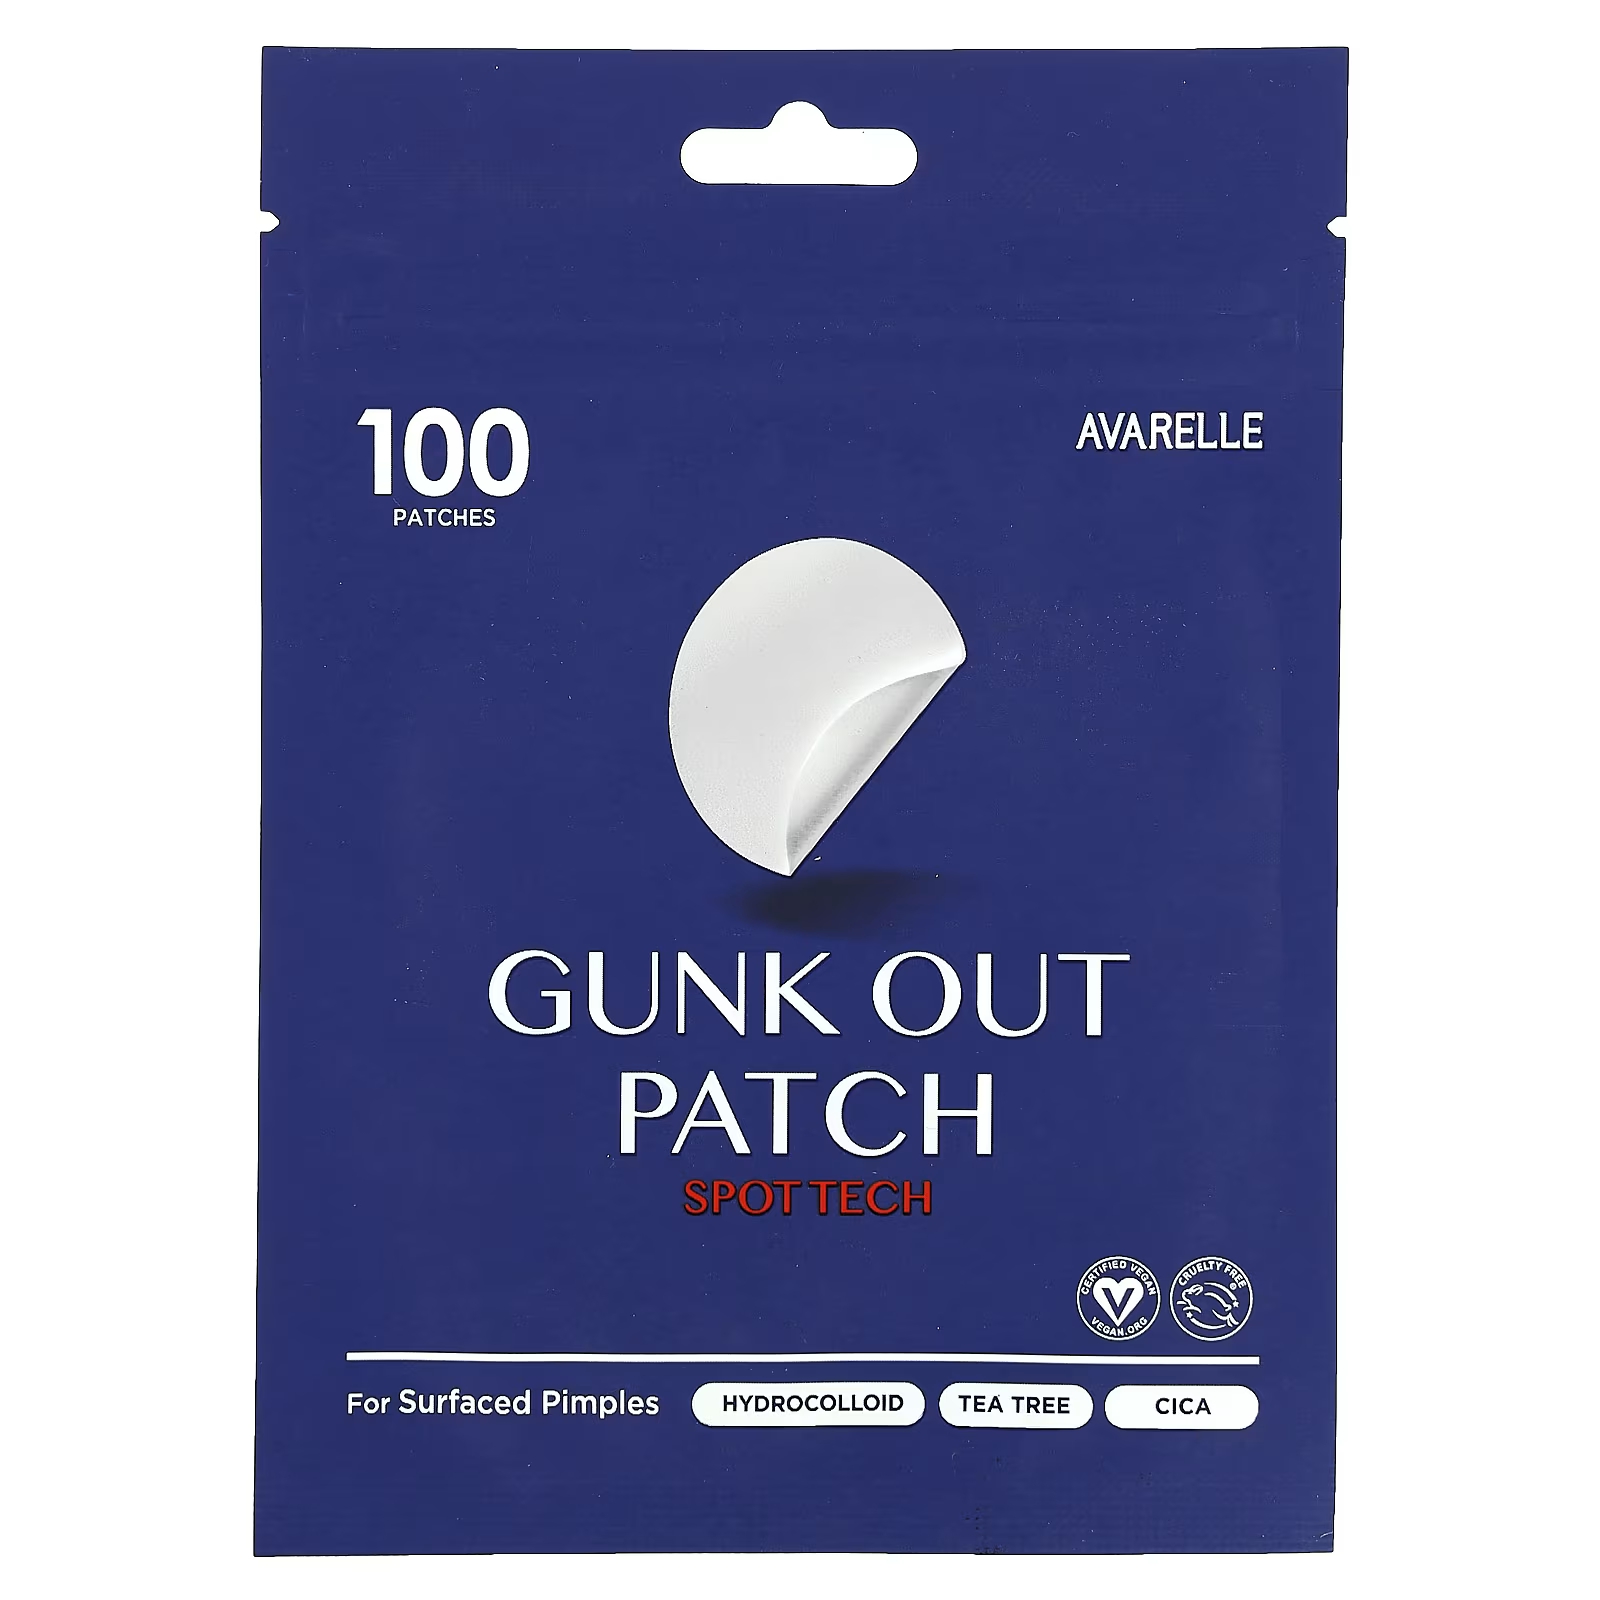 Avarelle Gunk Out Patch Spot Tech 100 Патчи avarelle патчи от прыщей frontline support 40 прозрачных патчей